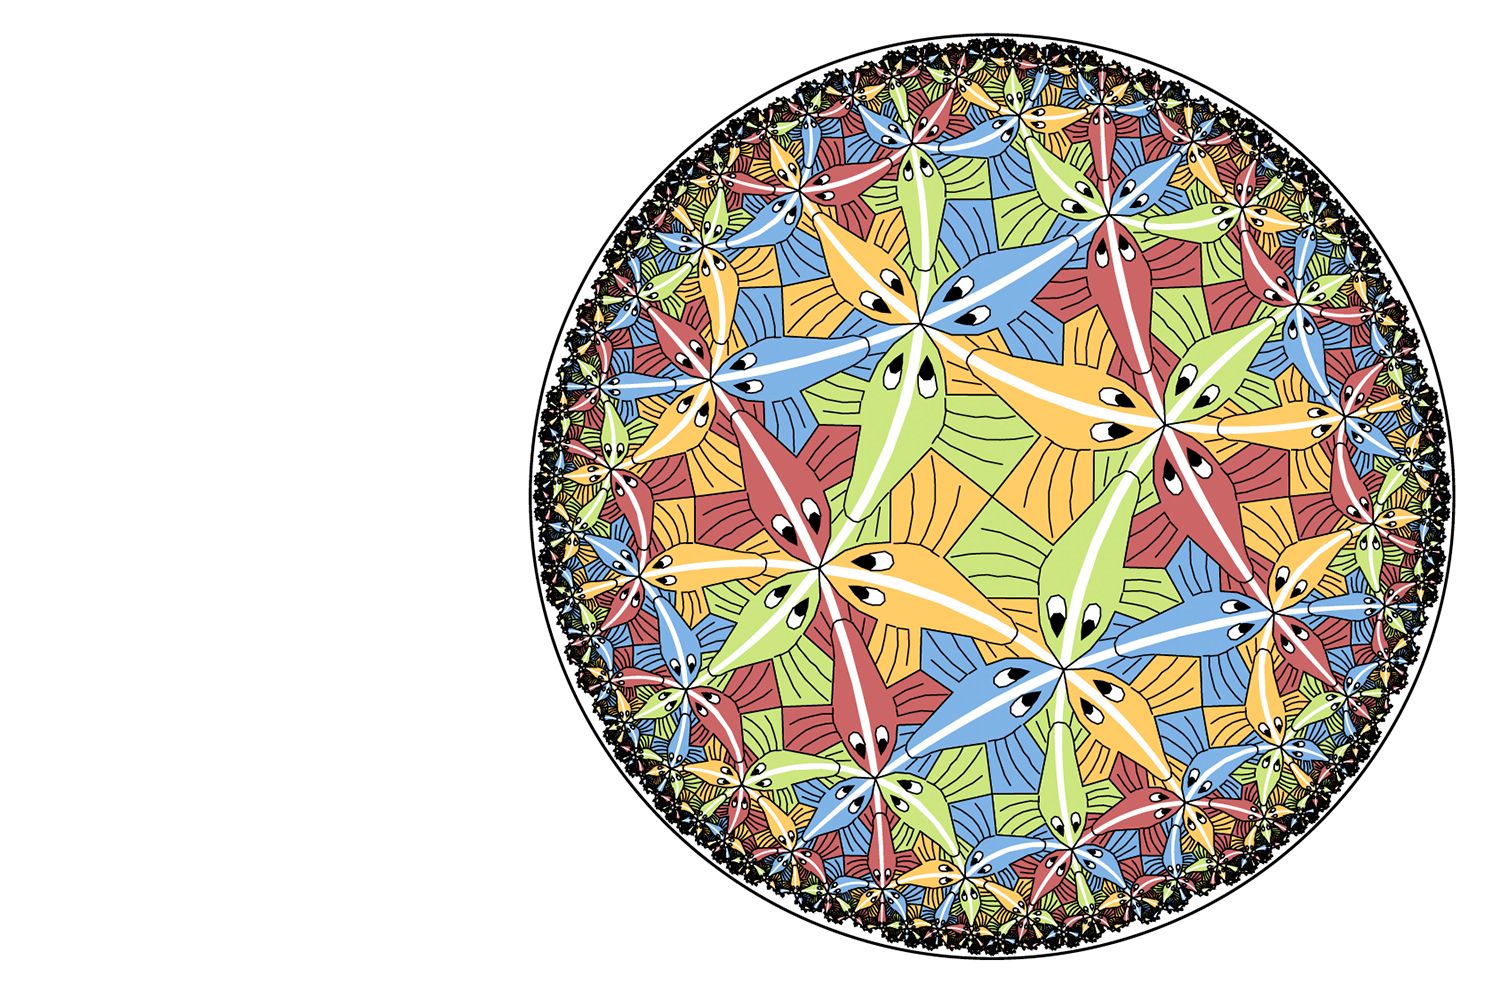 A rendition of Escher's Circle Limit III pattern.